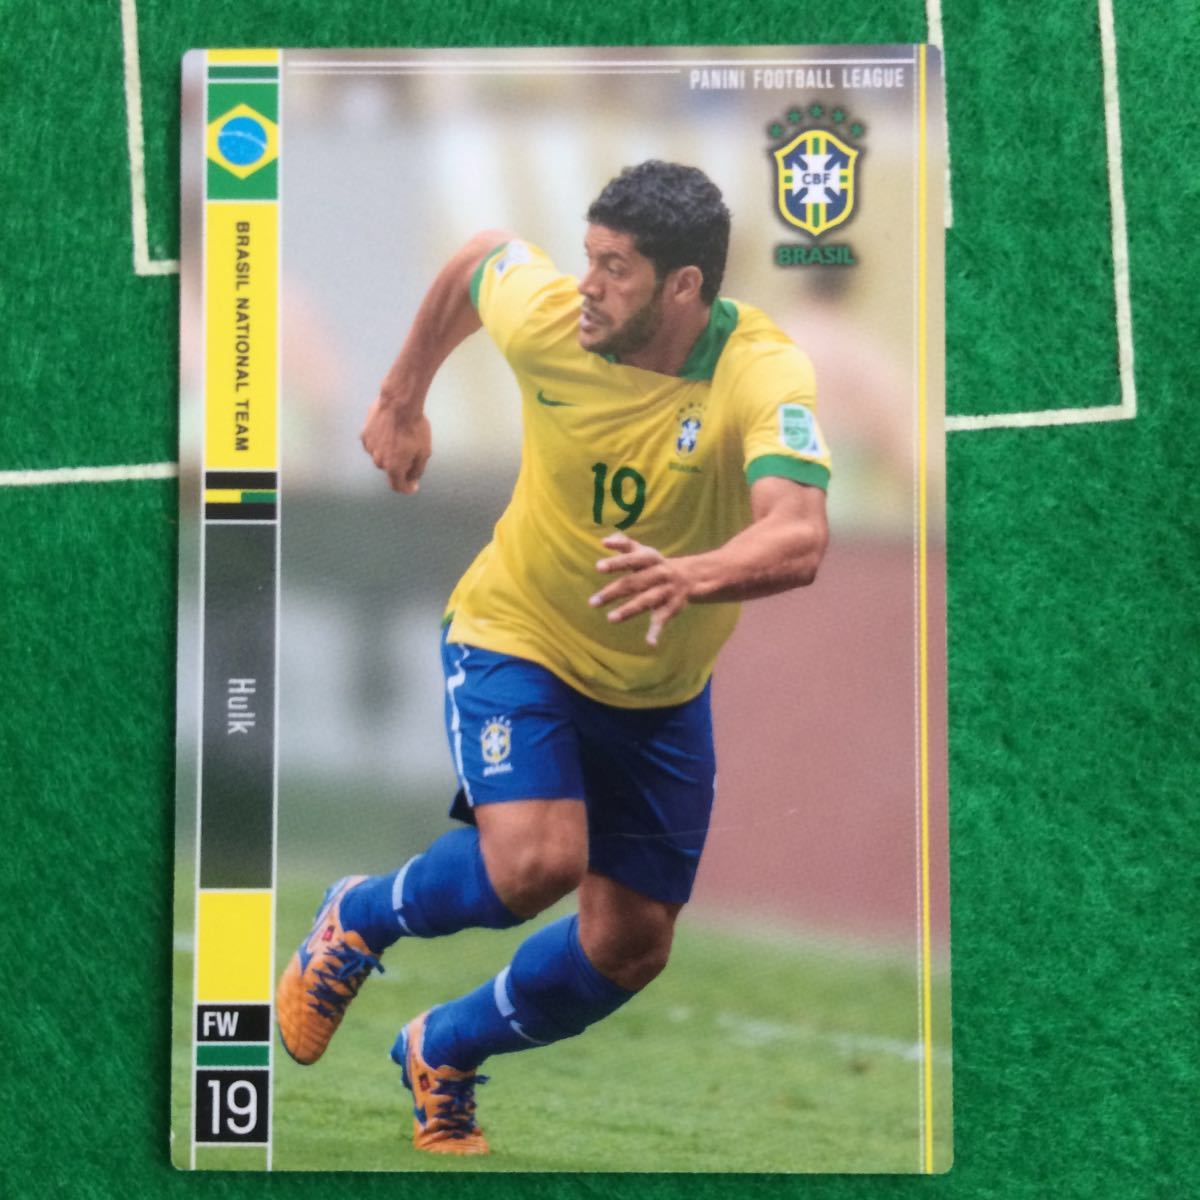 353)Panini Football League ブラジル代表 19 Hulk フッキ セレソン パニーニ フットボール リーグ_画像1